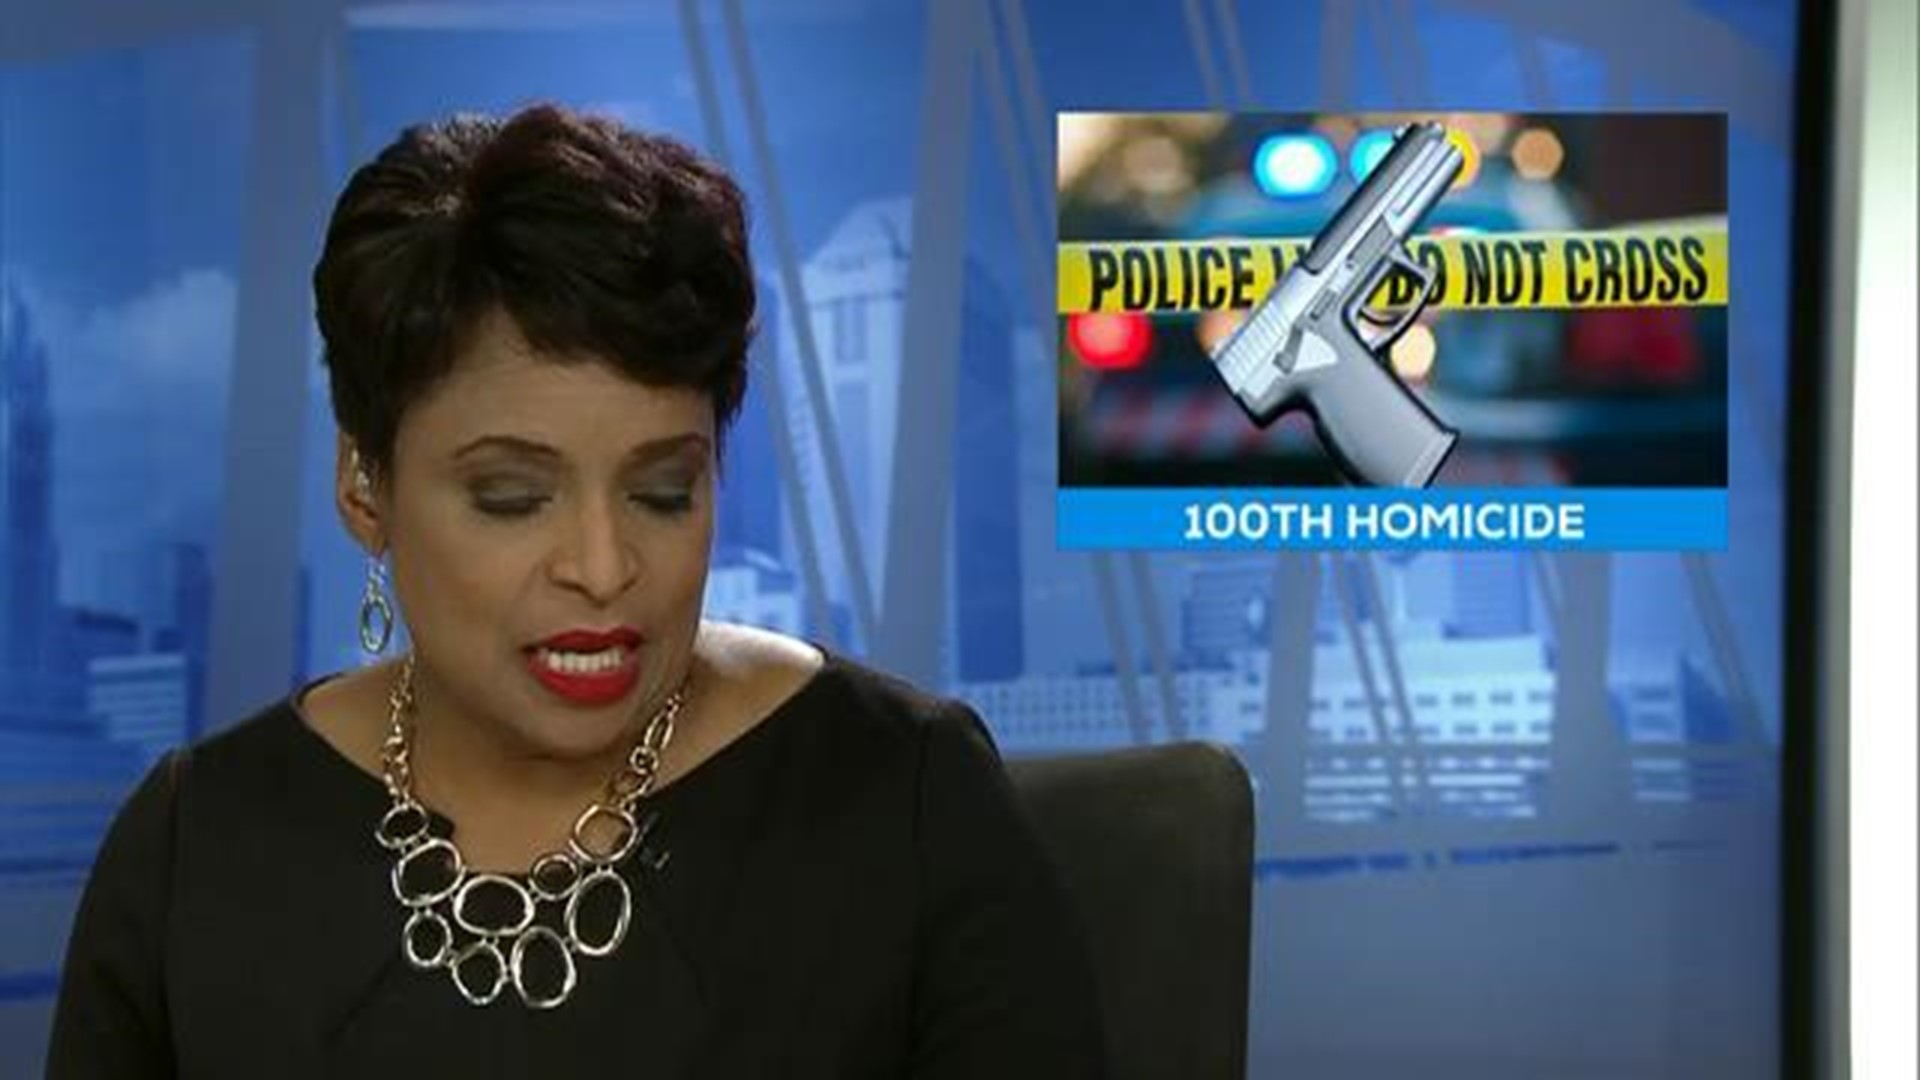 Columbus police investigating 100th homicide in 2017